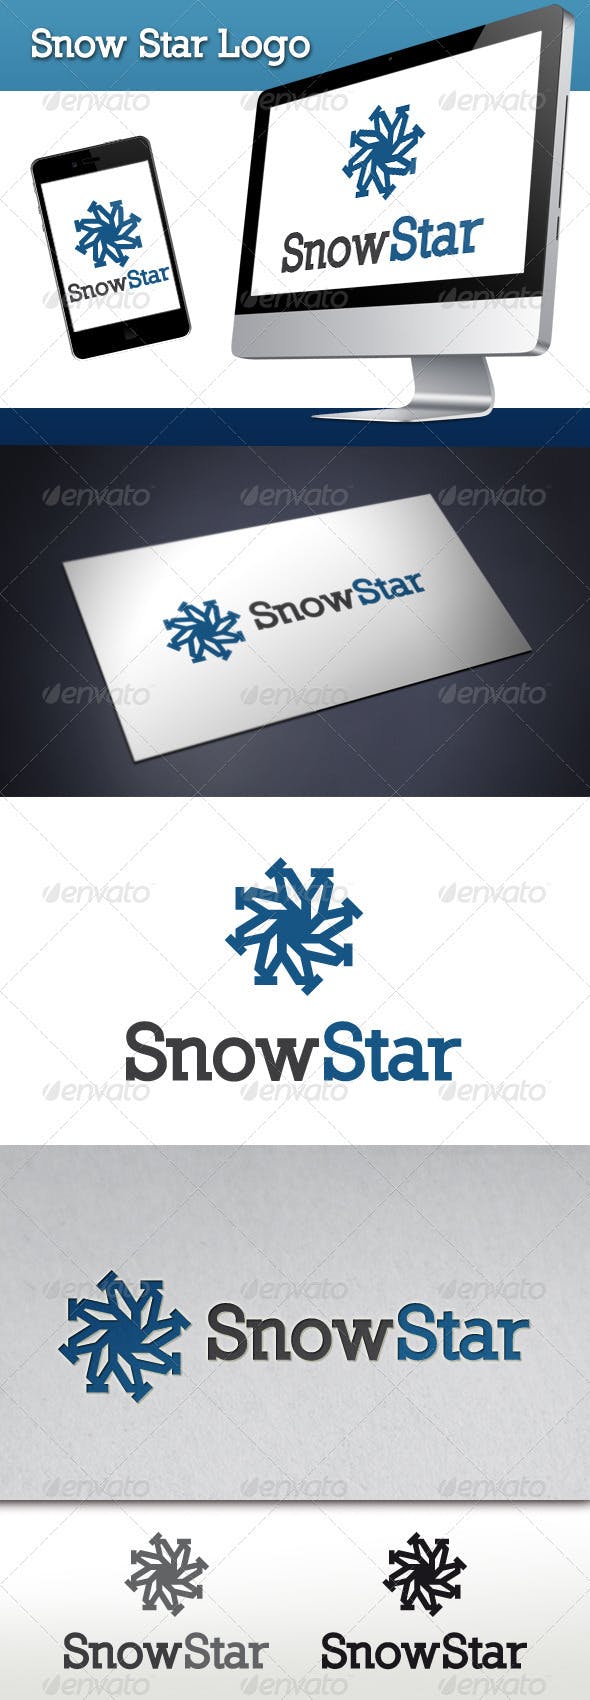 Snow Star Logo - Snow Star Logo Template by BossTwinsMusic | GraphicRiver